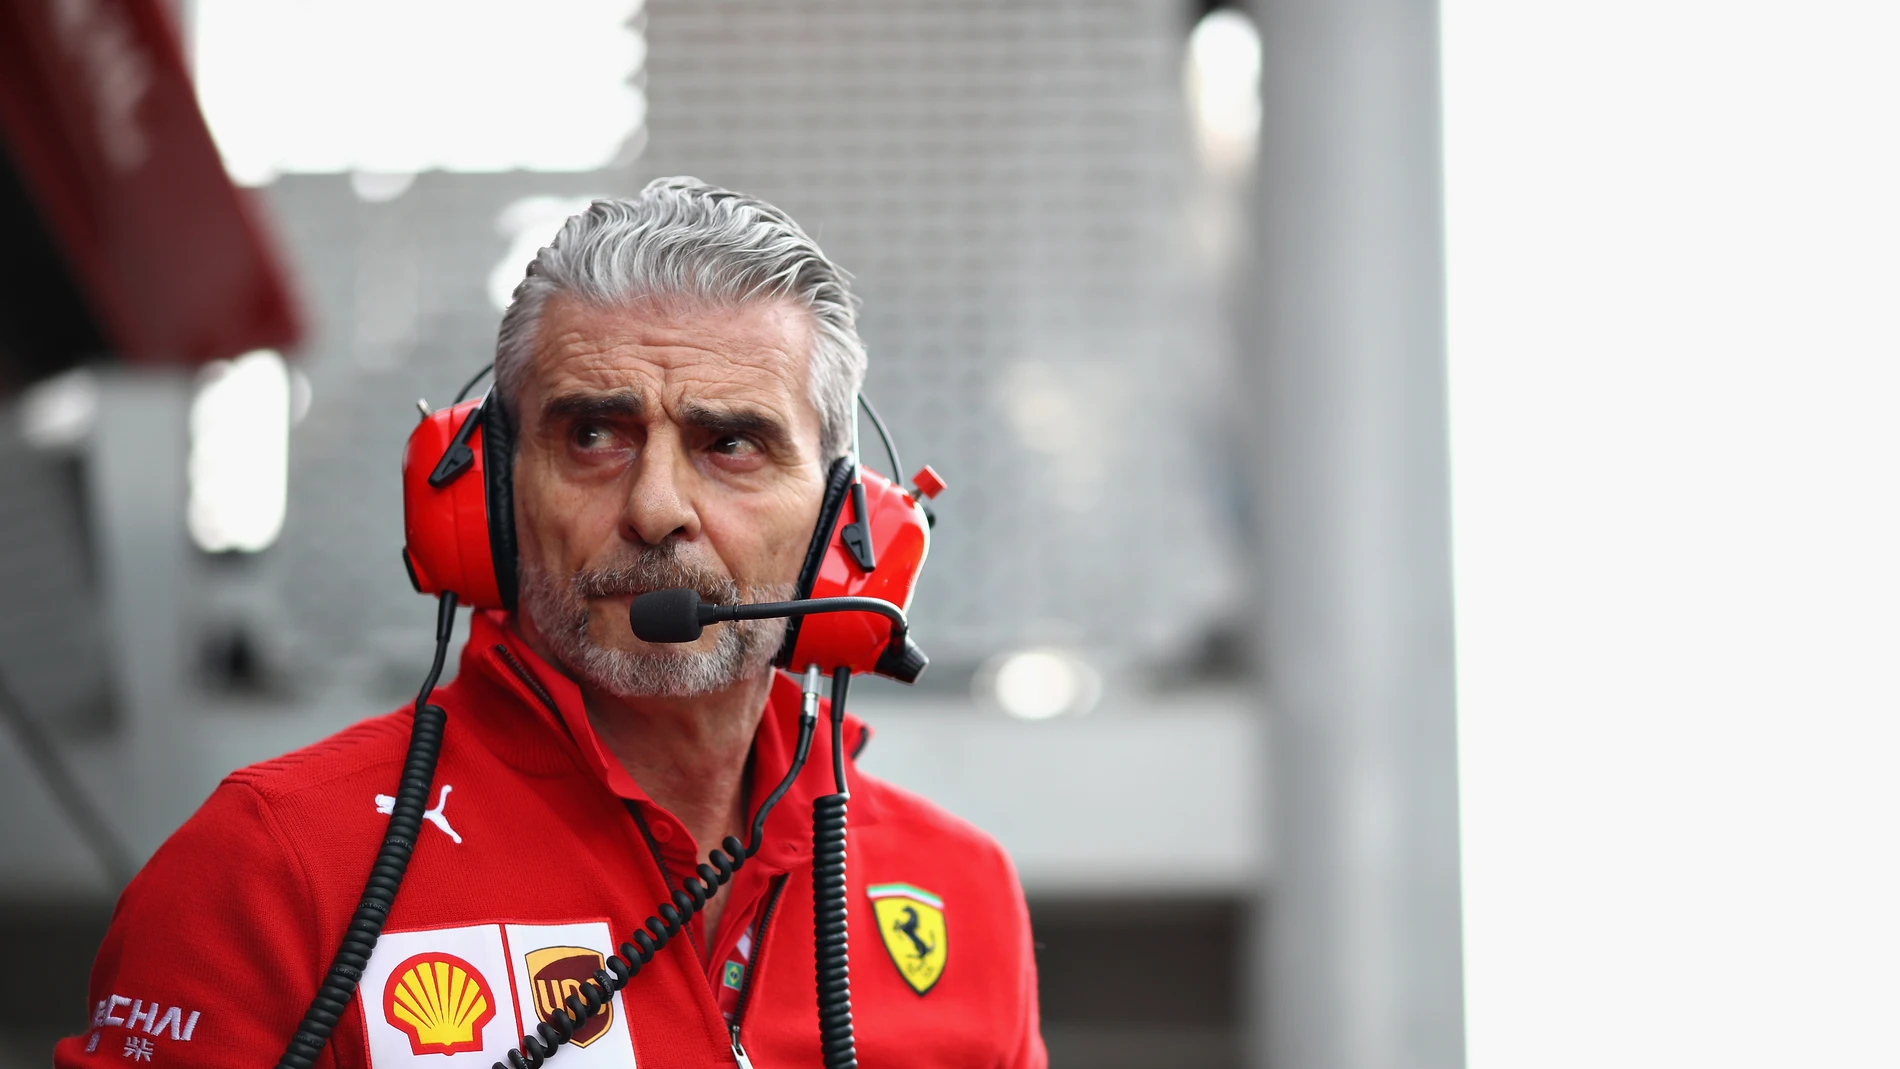 Maurizio Arrivabane, jefe de Ferrari